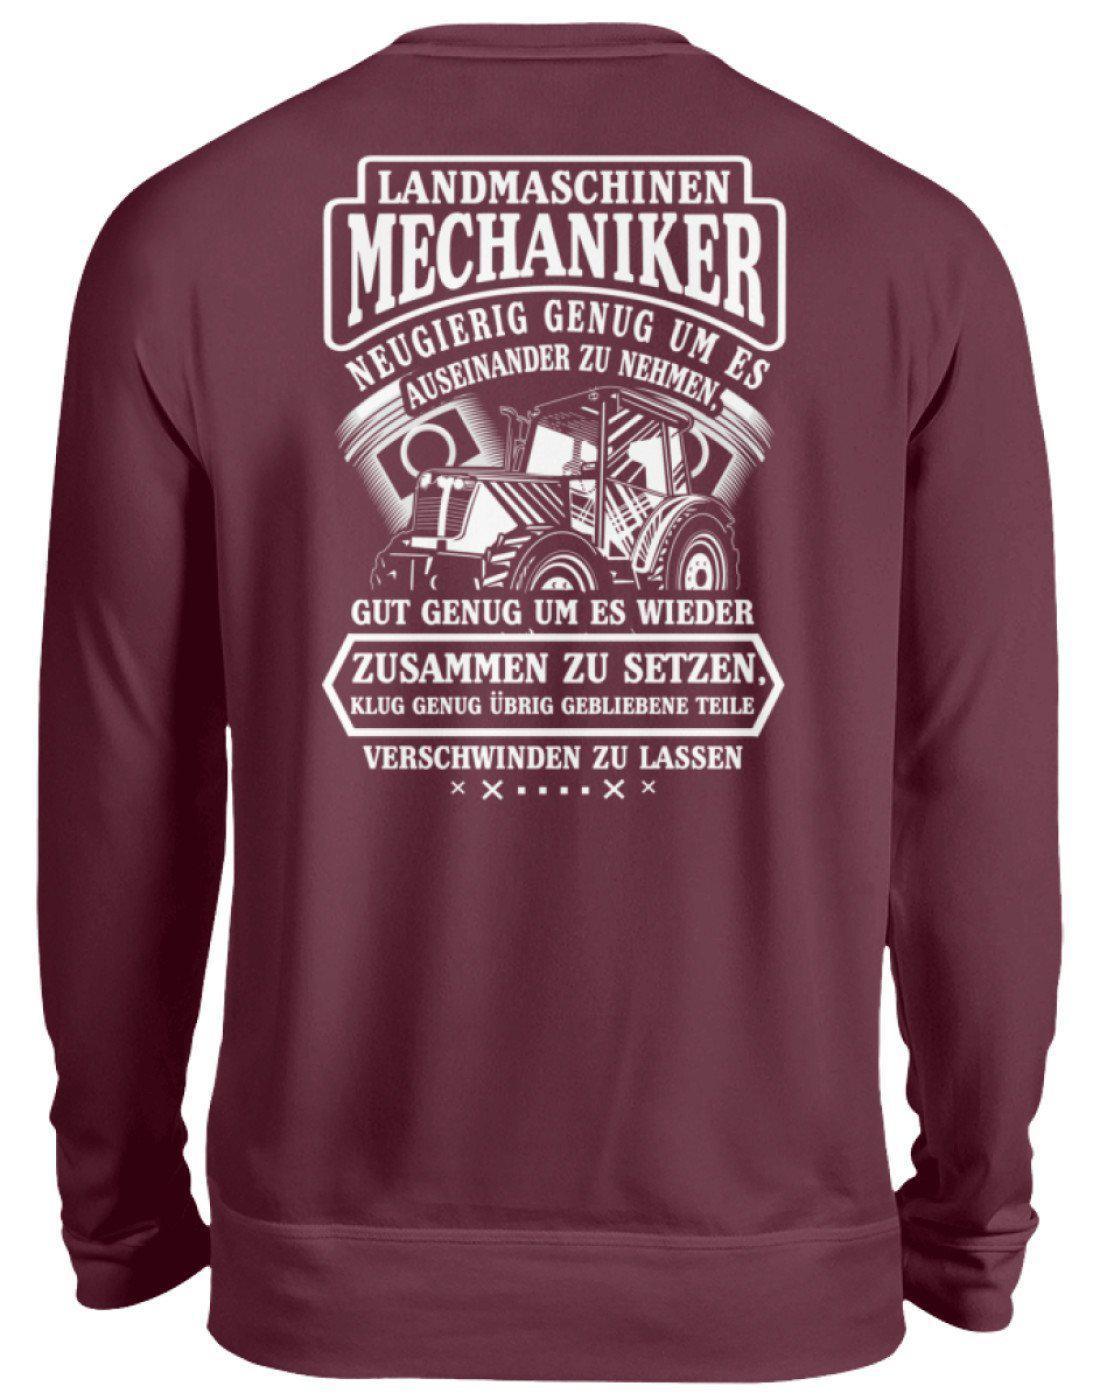 Mechaniker Neugierig · Unisex Sweatshirt Pullover-Unisex Sweatshirt-Burgundy-S-Agrarstarz